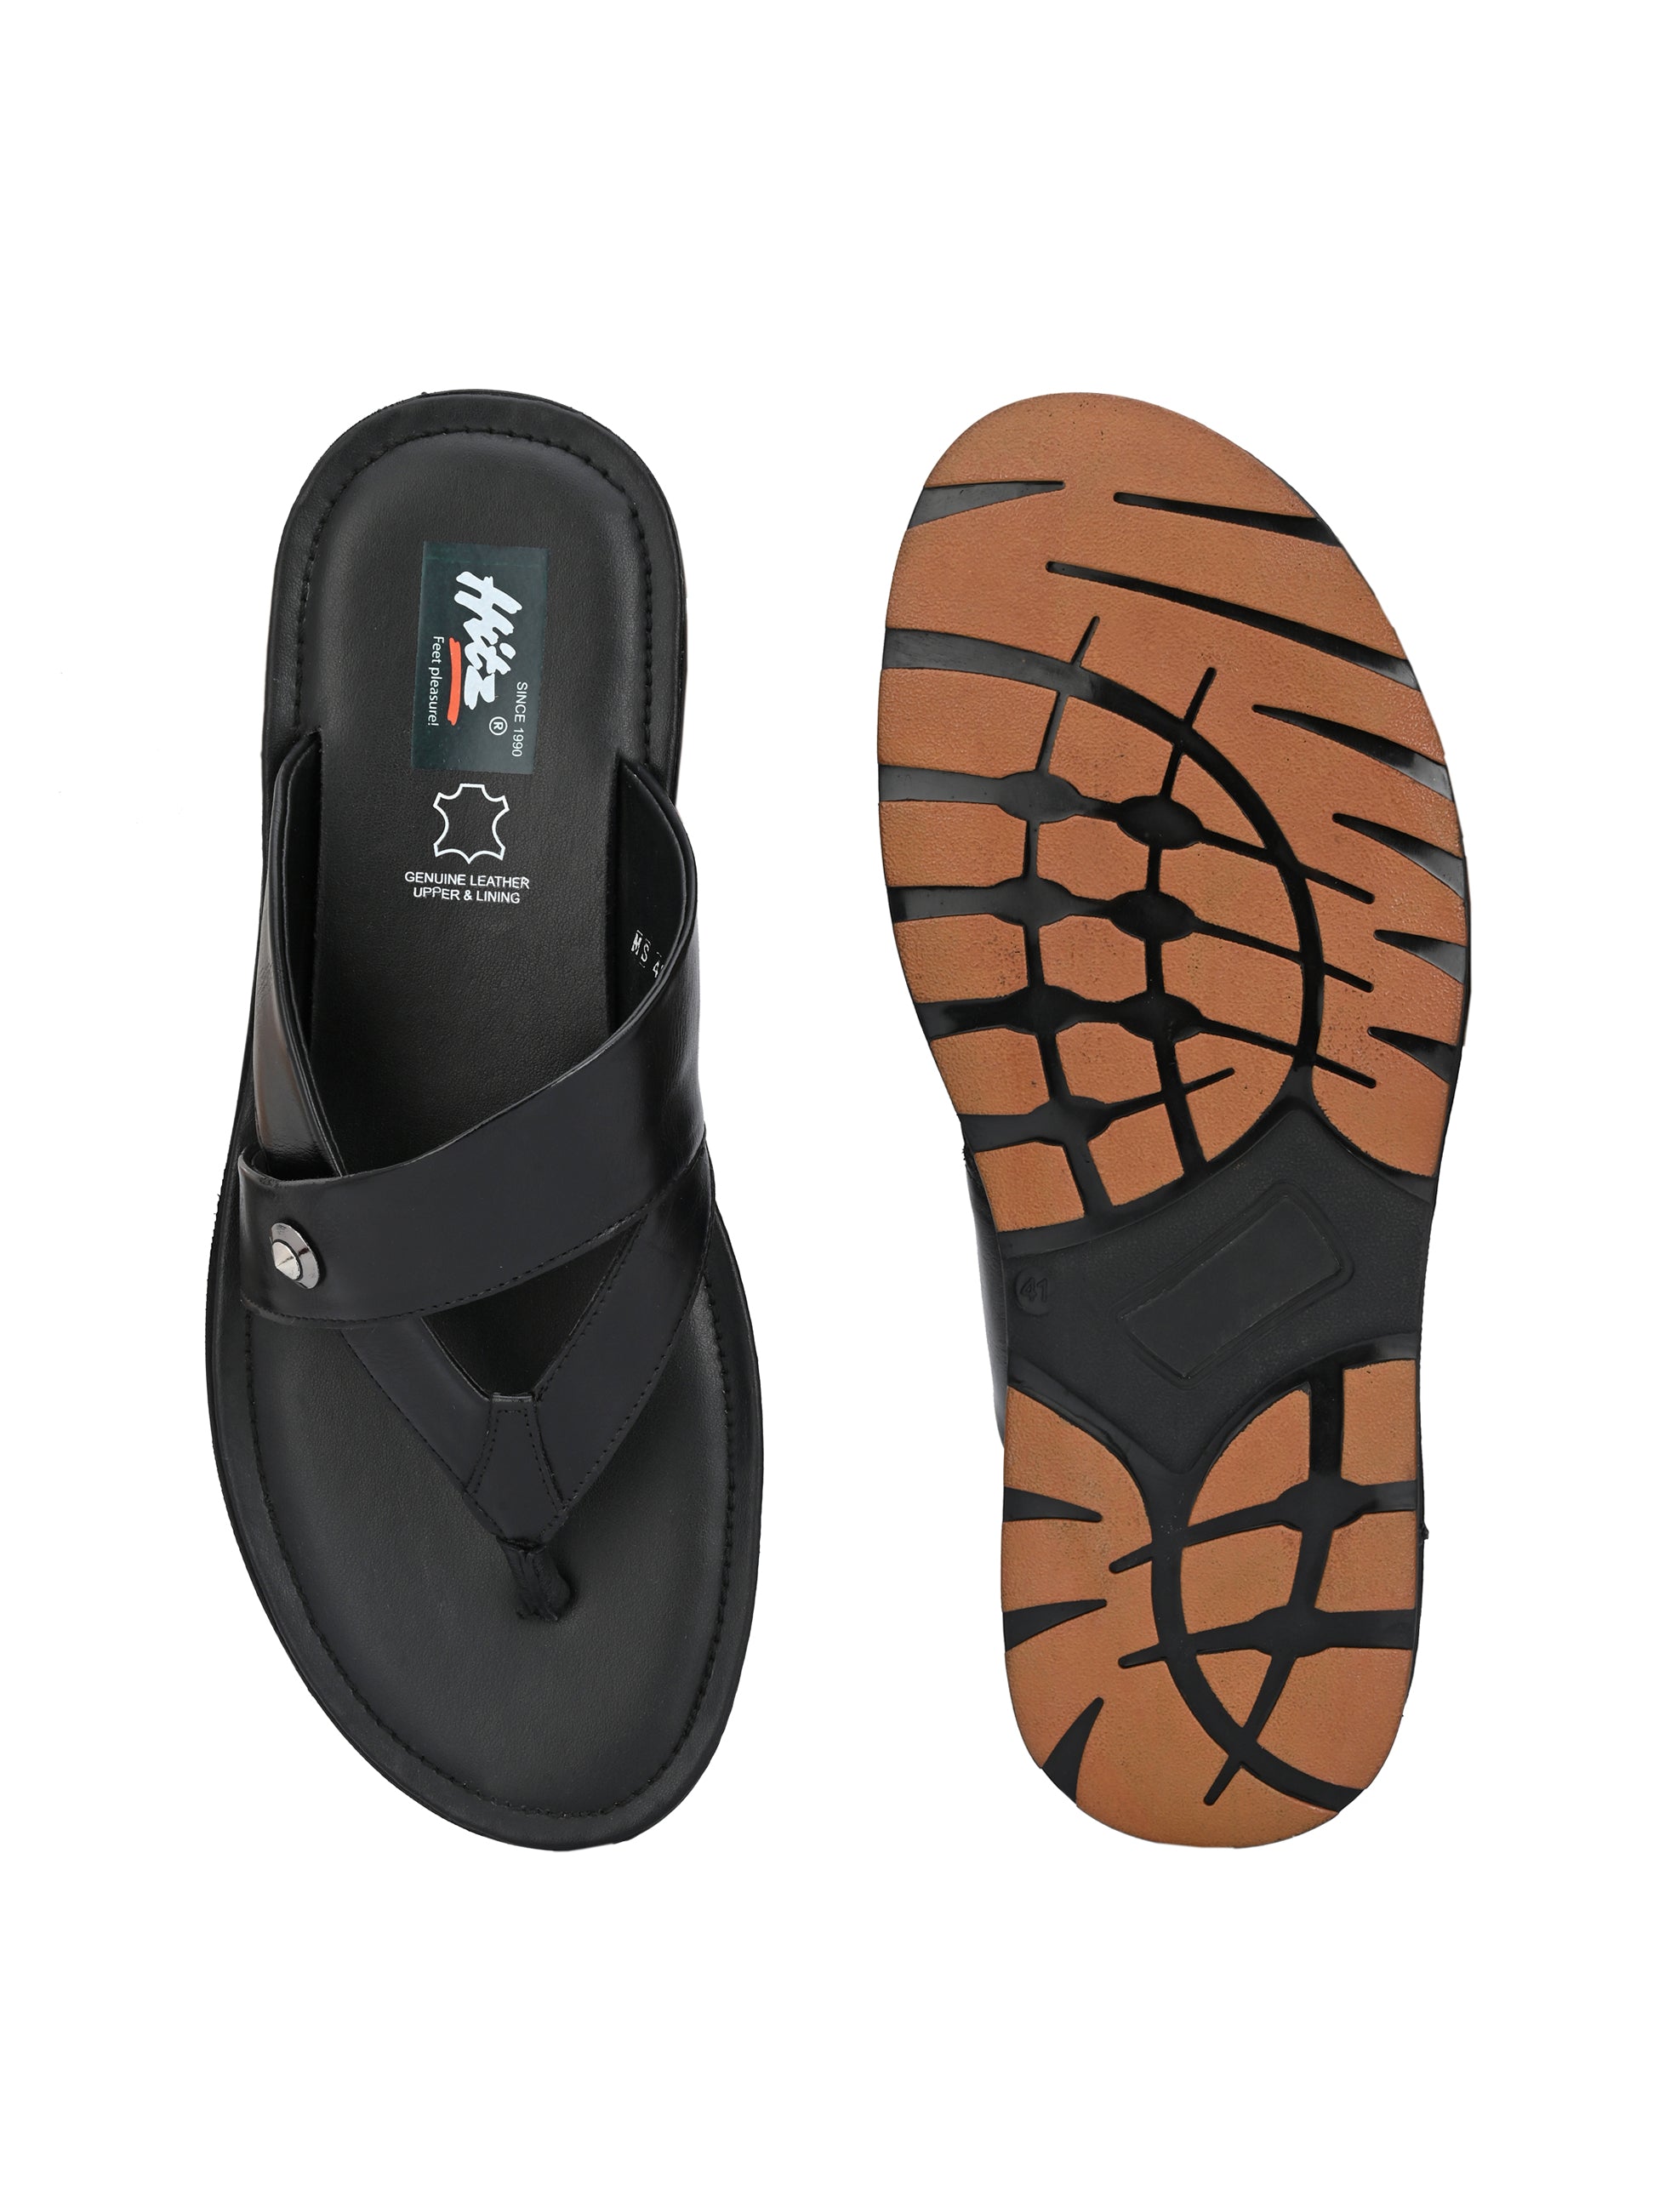 Mens Sandal |Buy Mens Slipper at Great Prices from Redtape